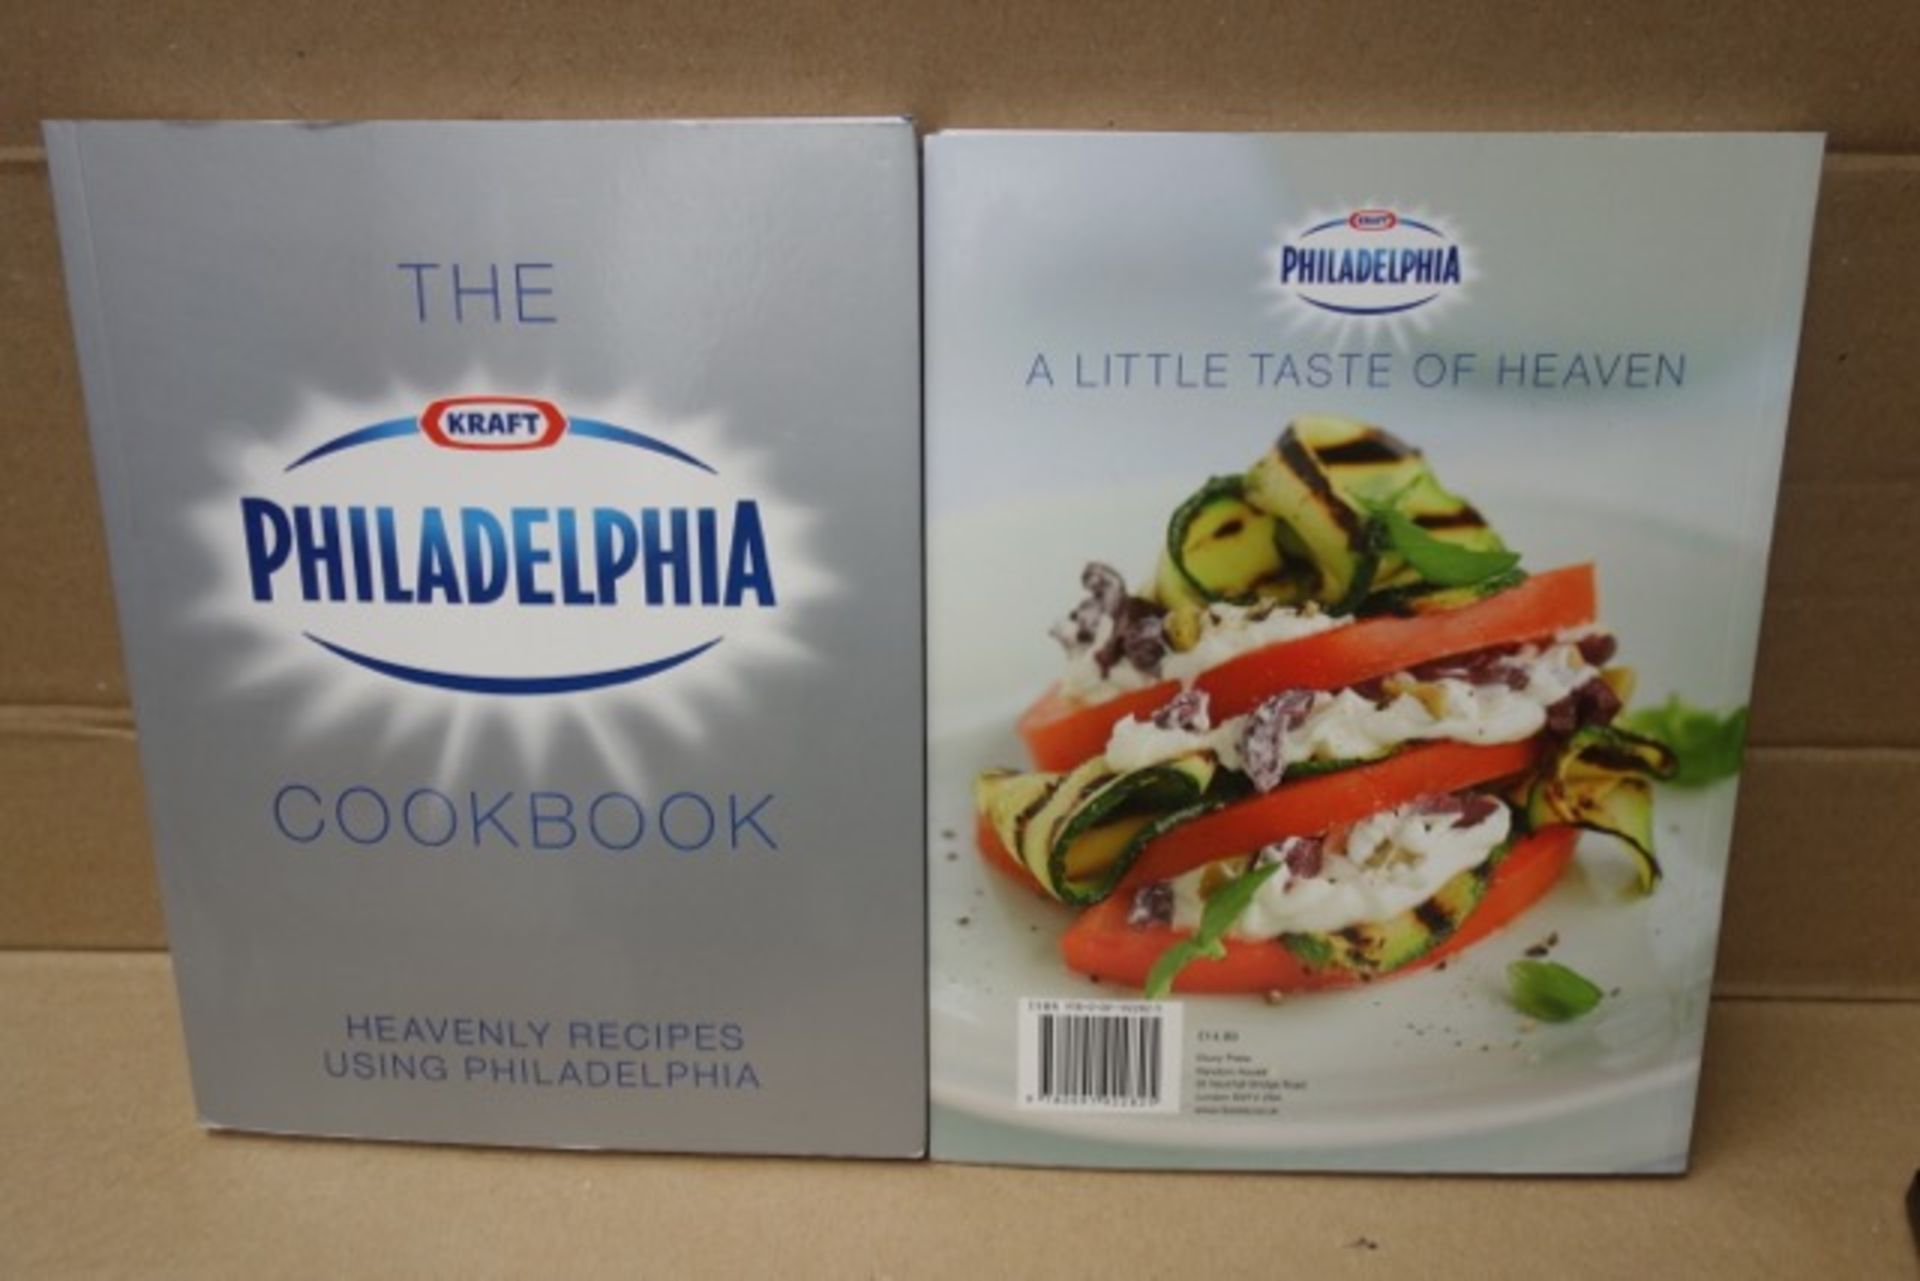 104 x The Kraft Philadephia Cookbook. Heavenly Recipes Using Philadelphia. Price marked at £14.99